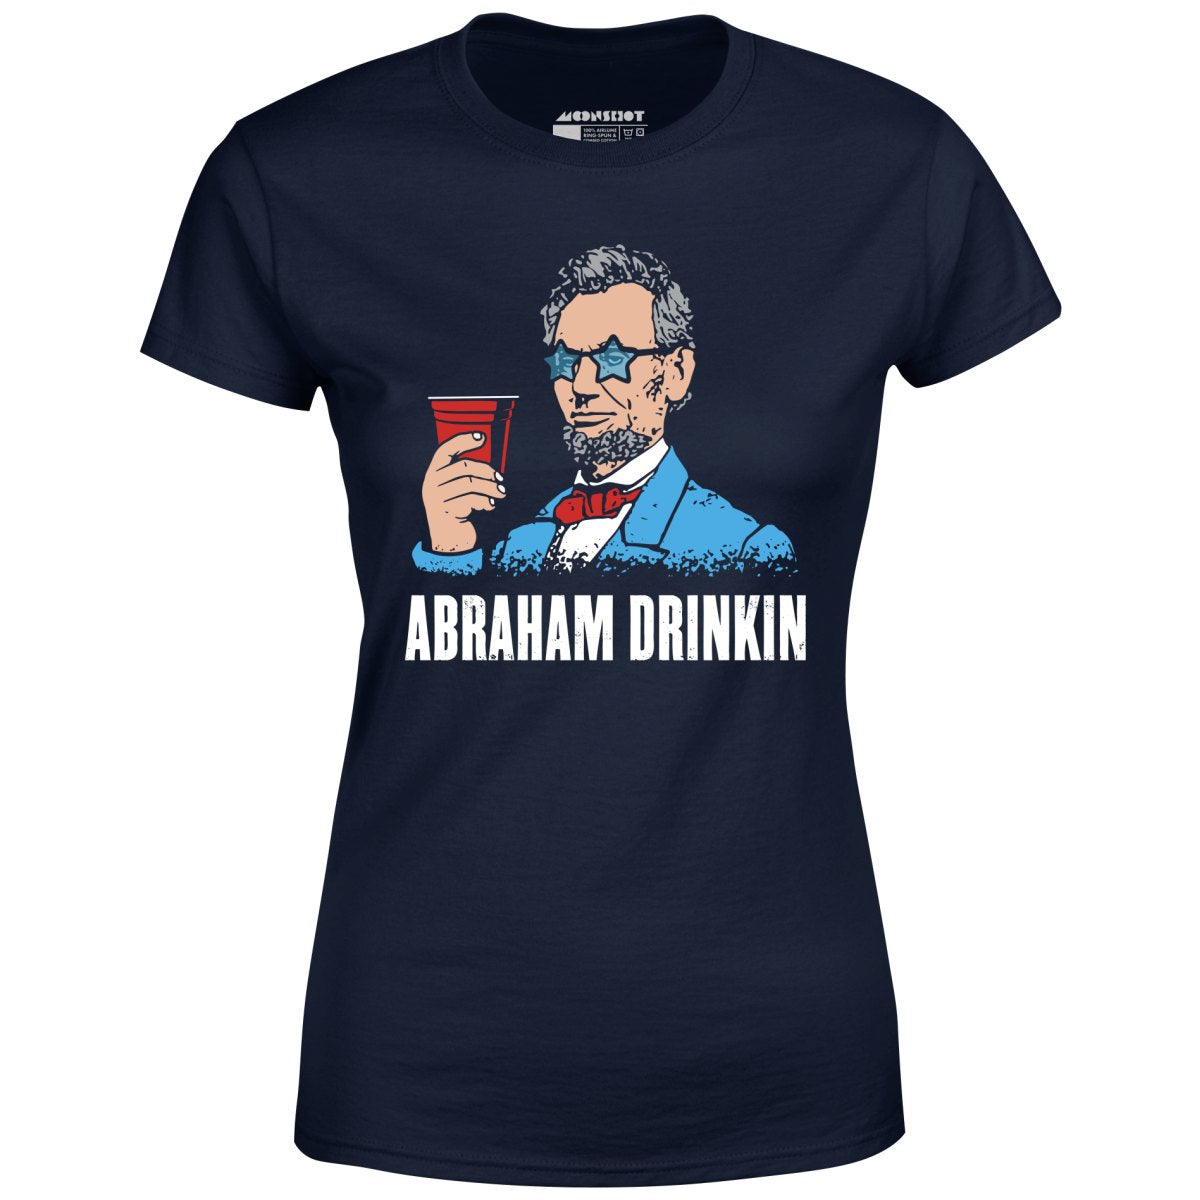 Abraham Drinkin - Women's T-Shirt